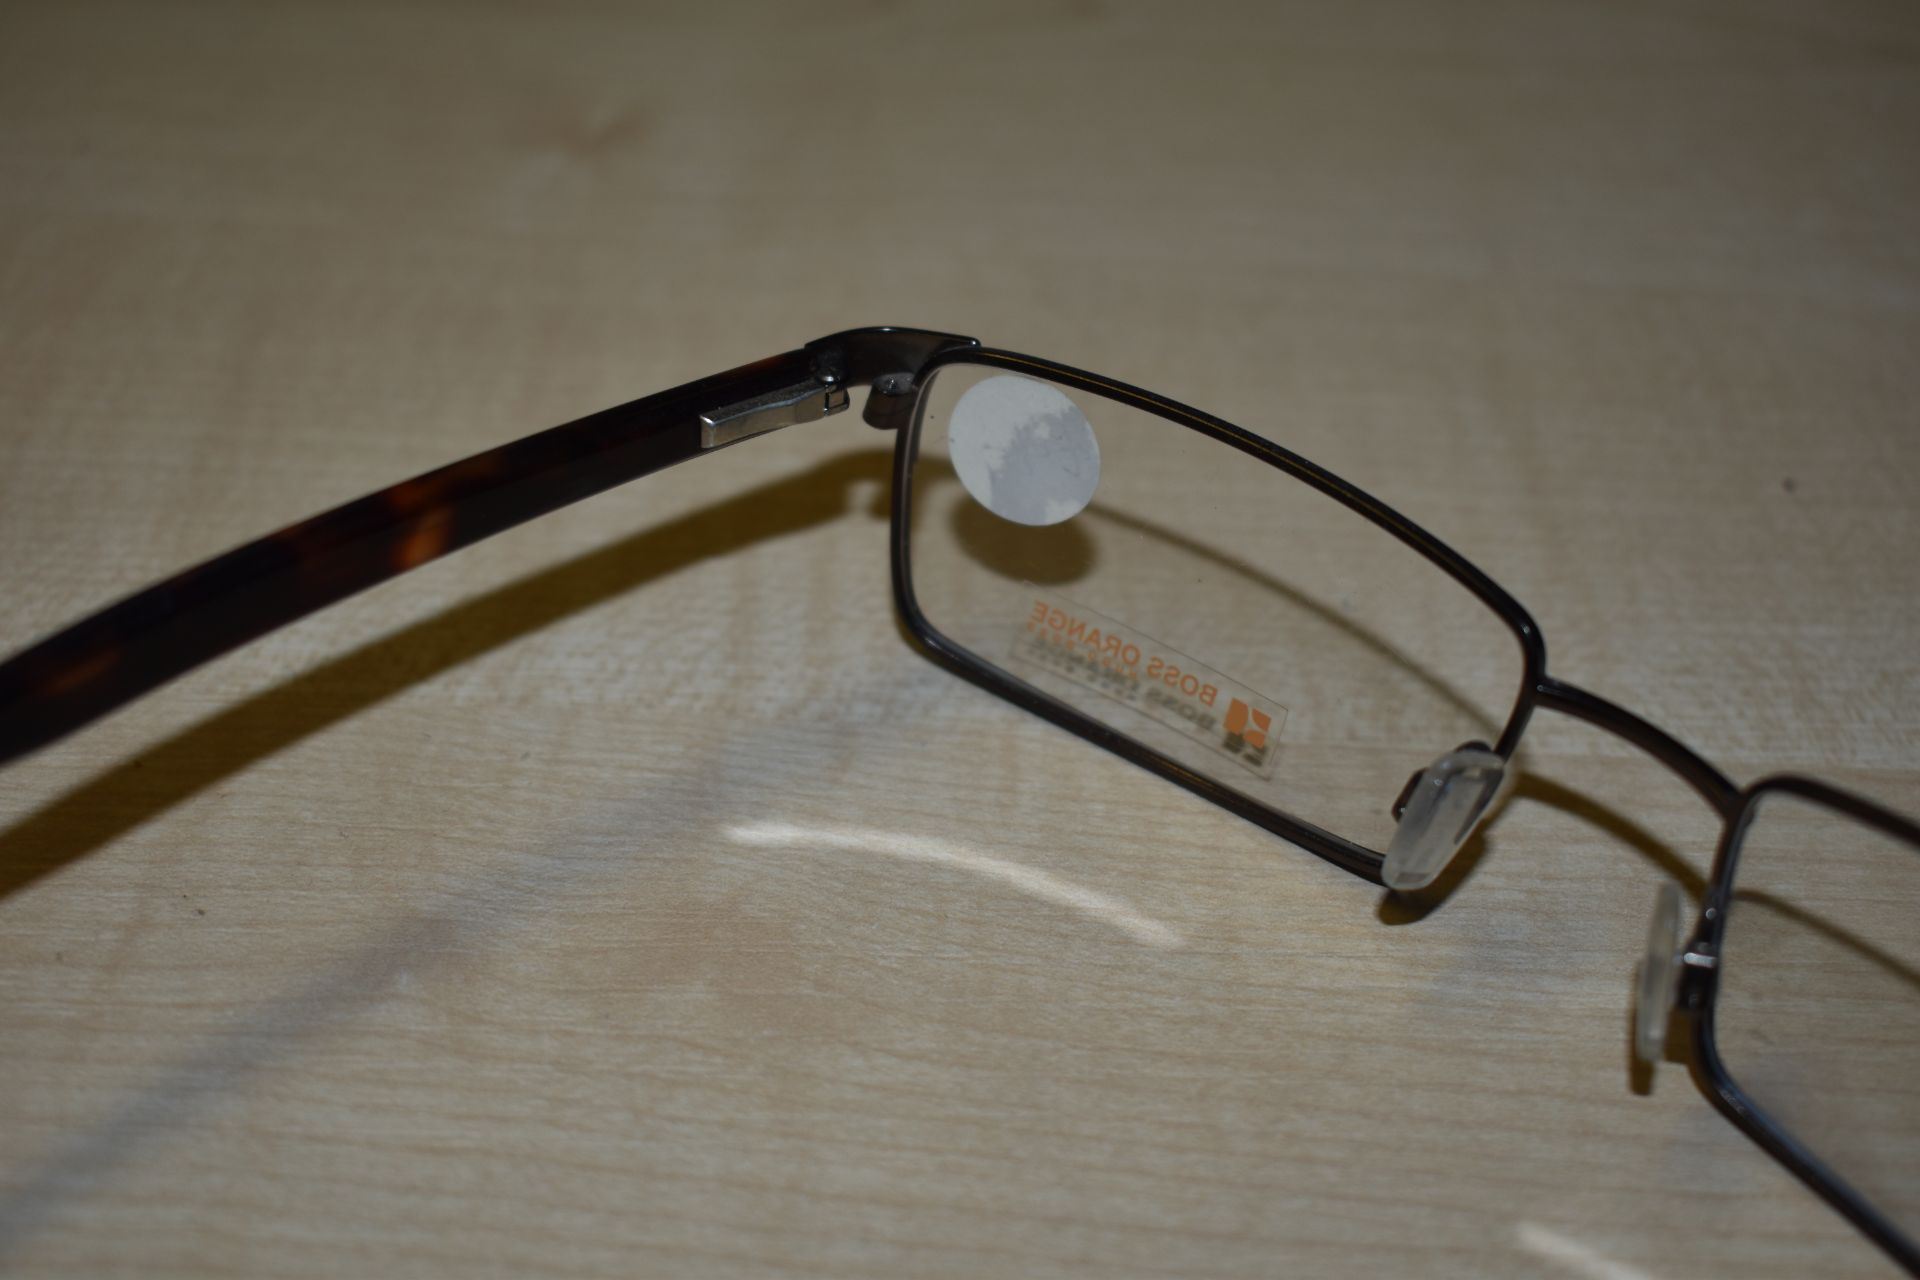 1 x Genuine BOSS ORANGE Spectacle Eye Glasses Frame - Ex Display Stock  - Ref: GTI193 - CL645 - - Image 6 of 11